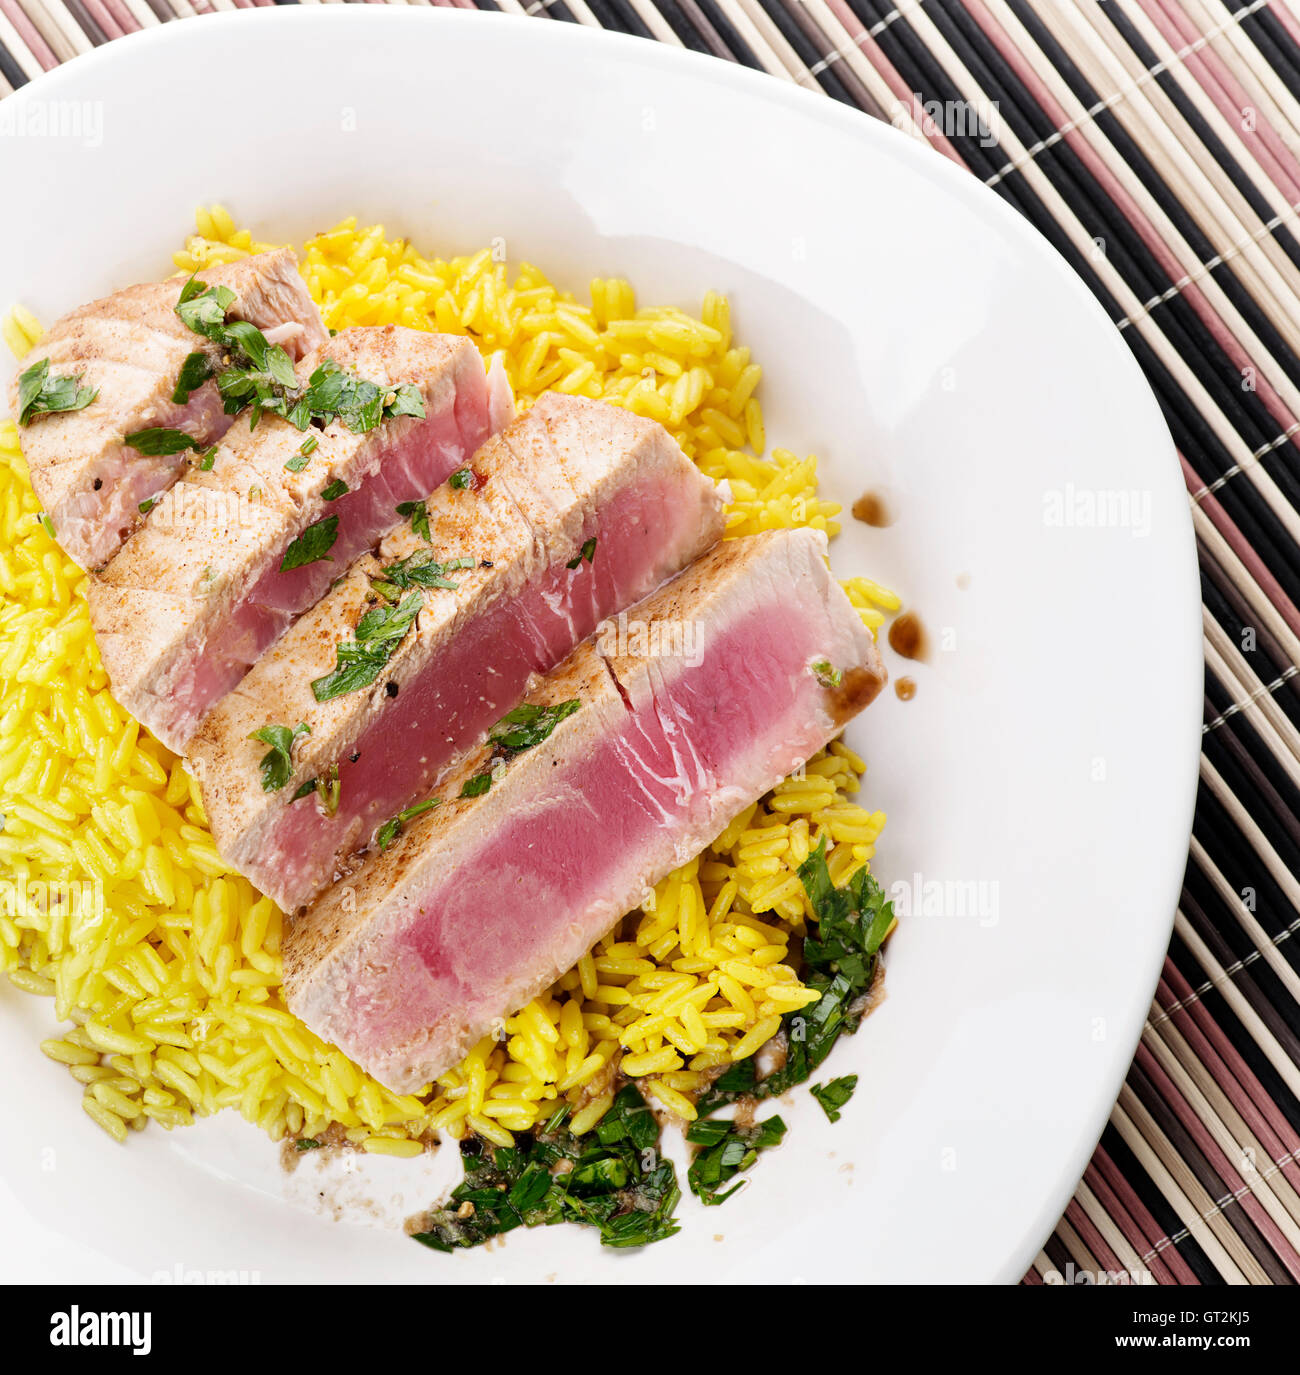 Ahi Tuna Steak With Rice and herbs sauce Stock Photo